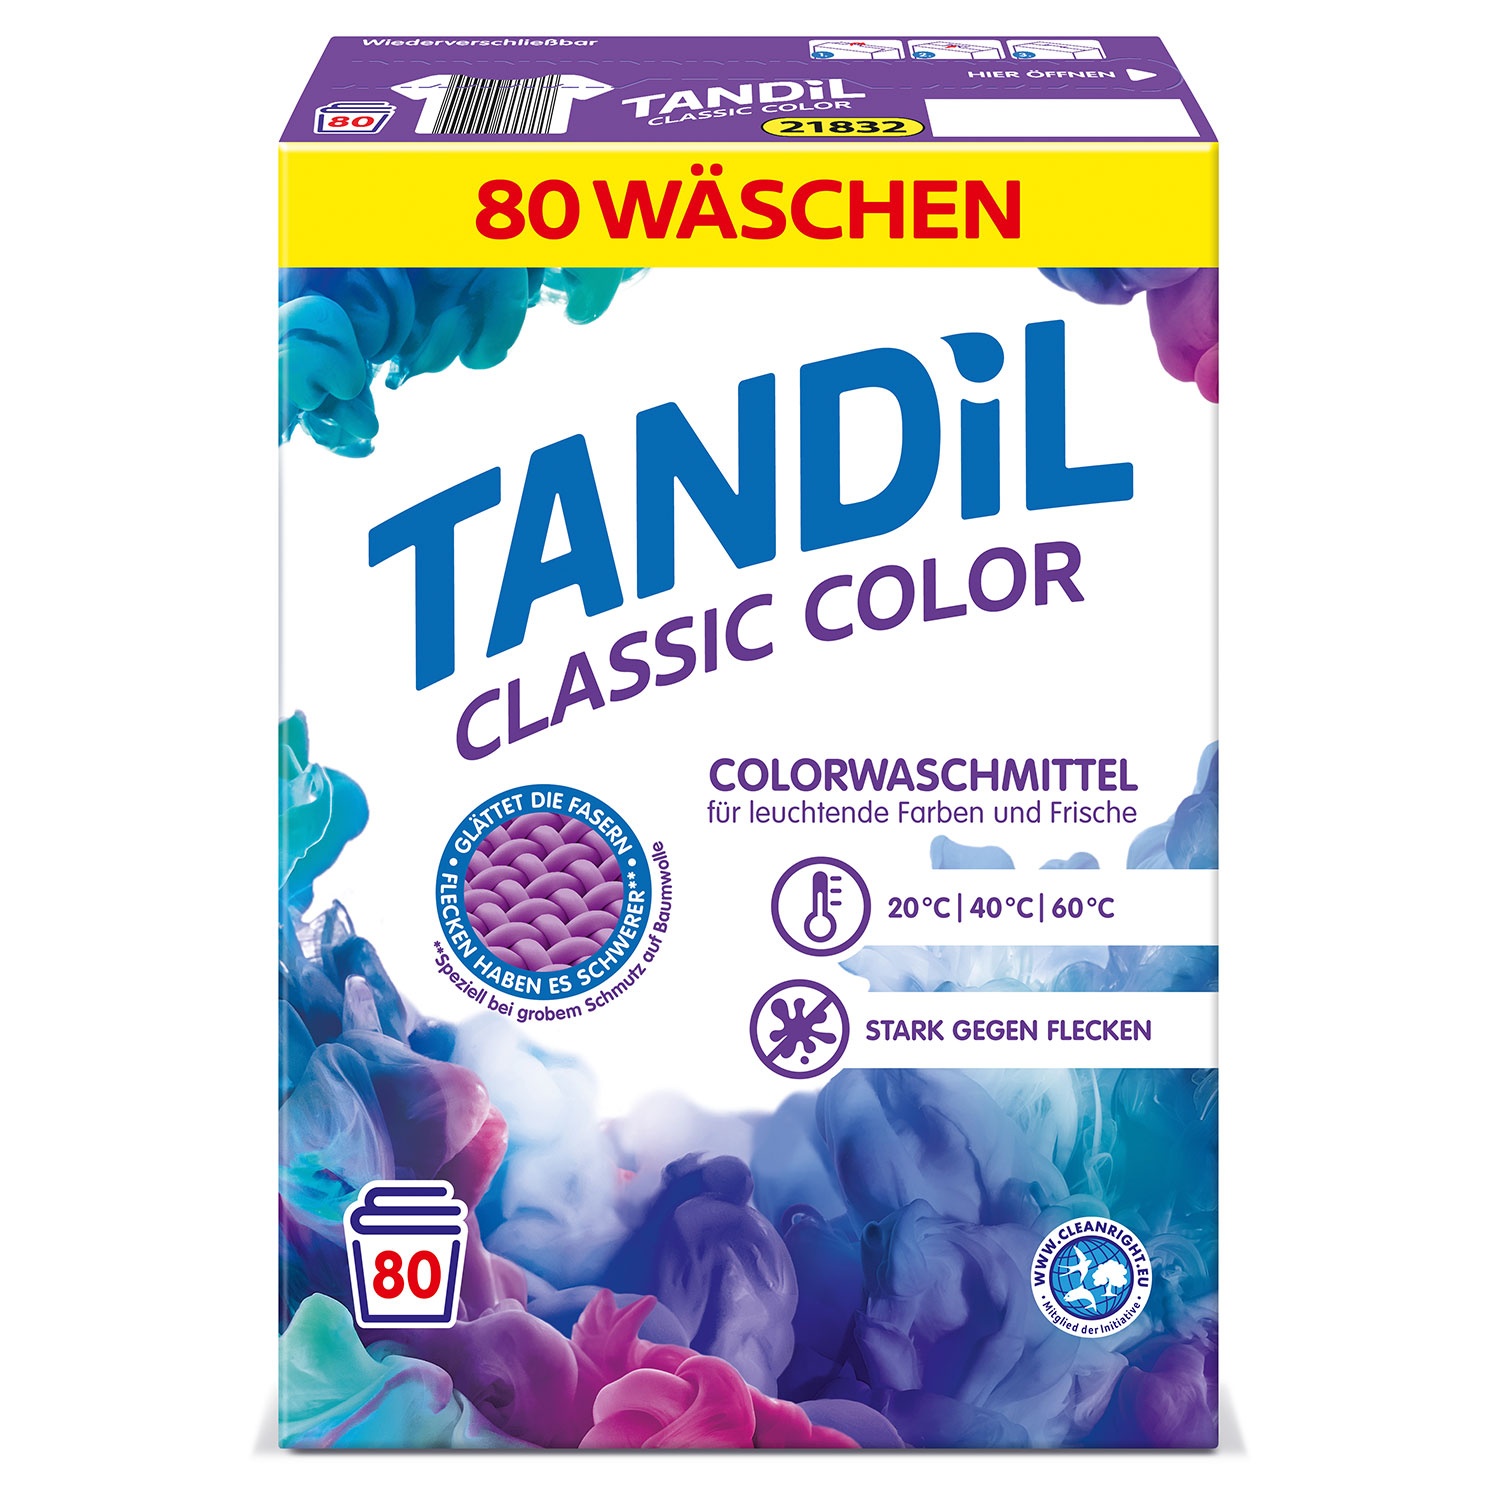 TANDIL Classic Colorwaschmittel 5,2 kg